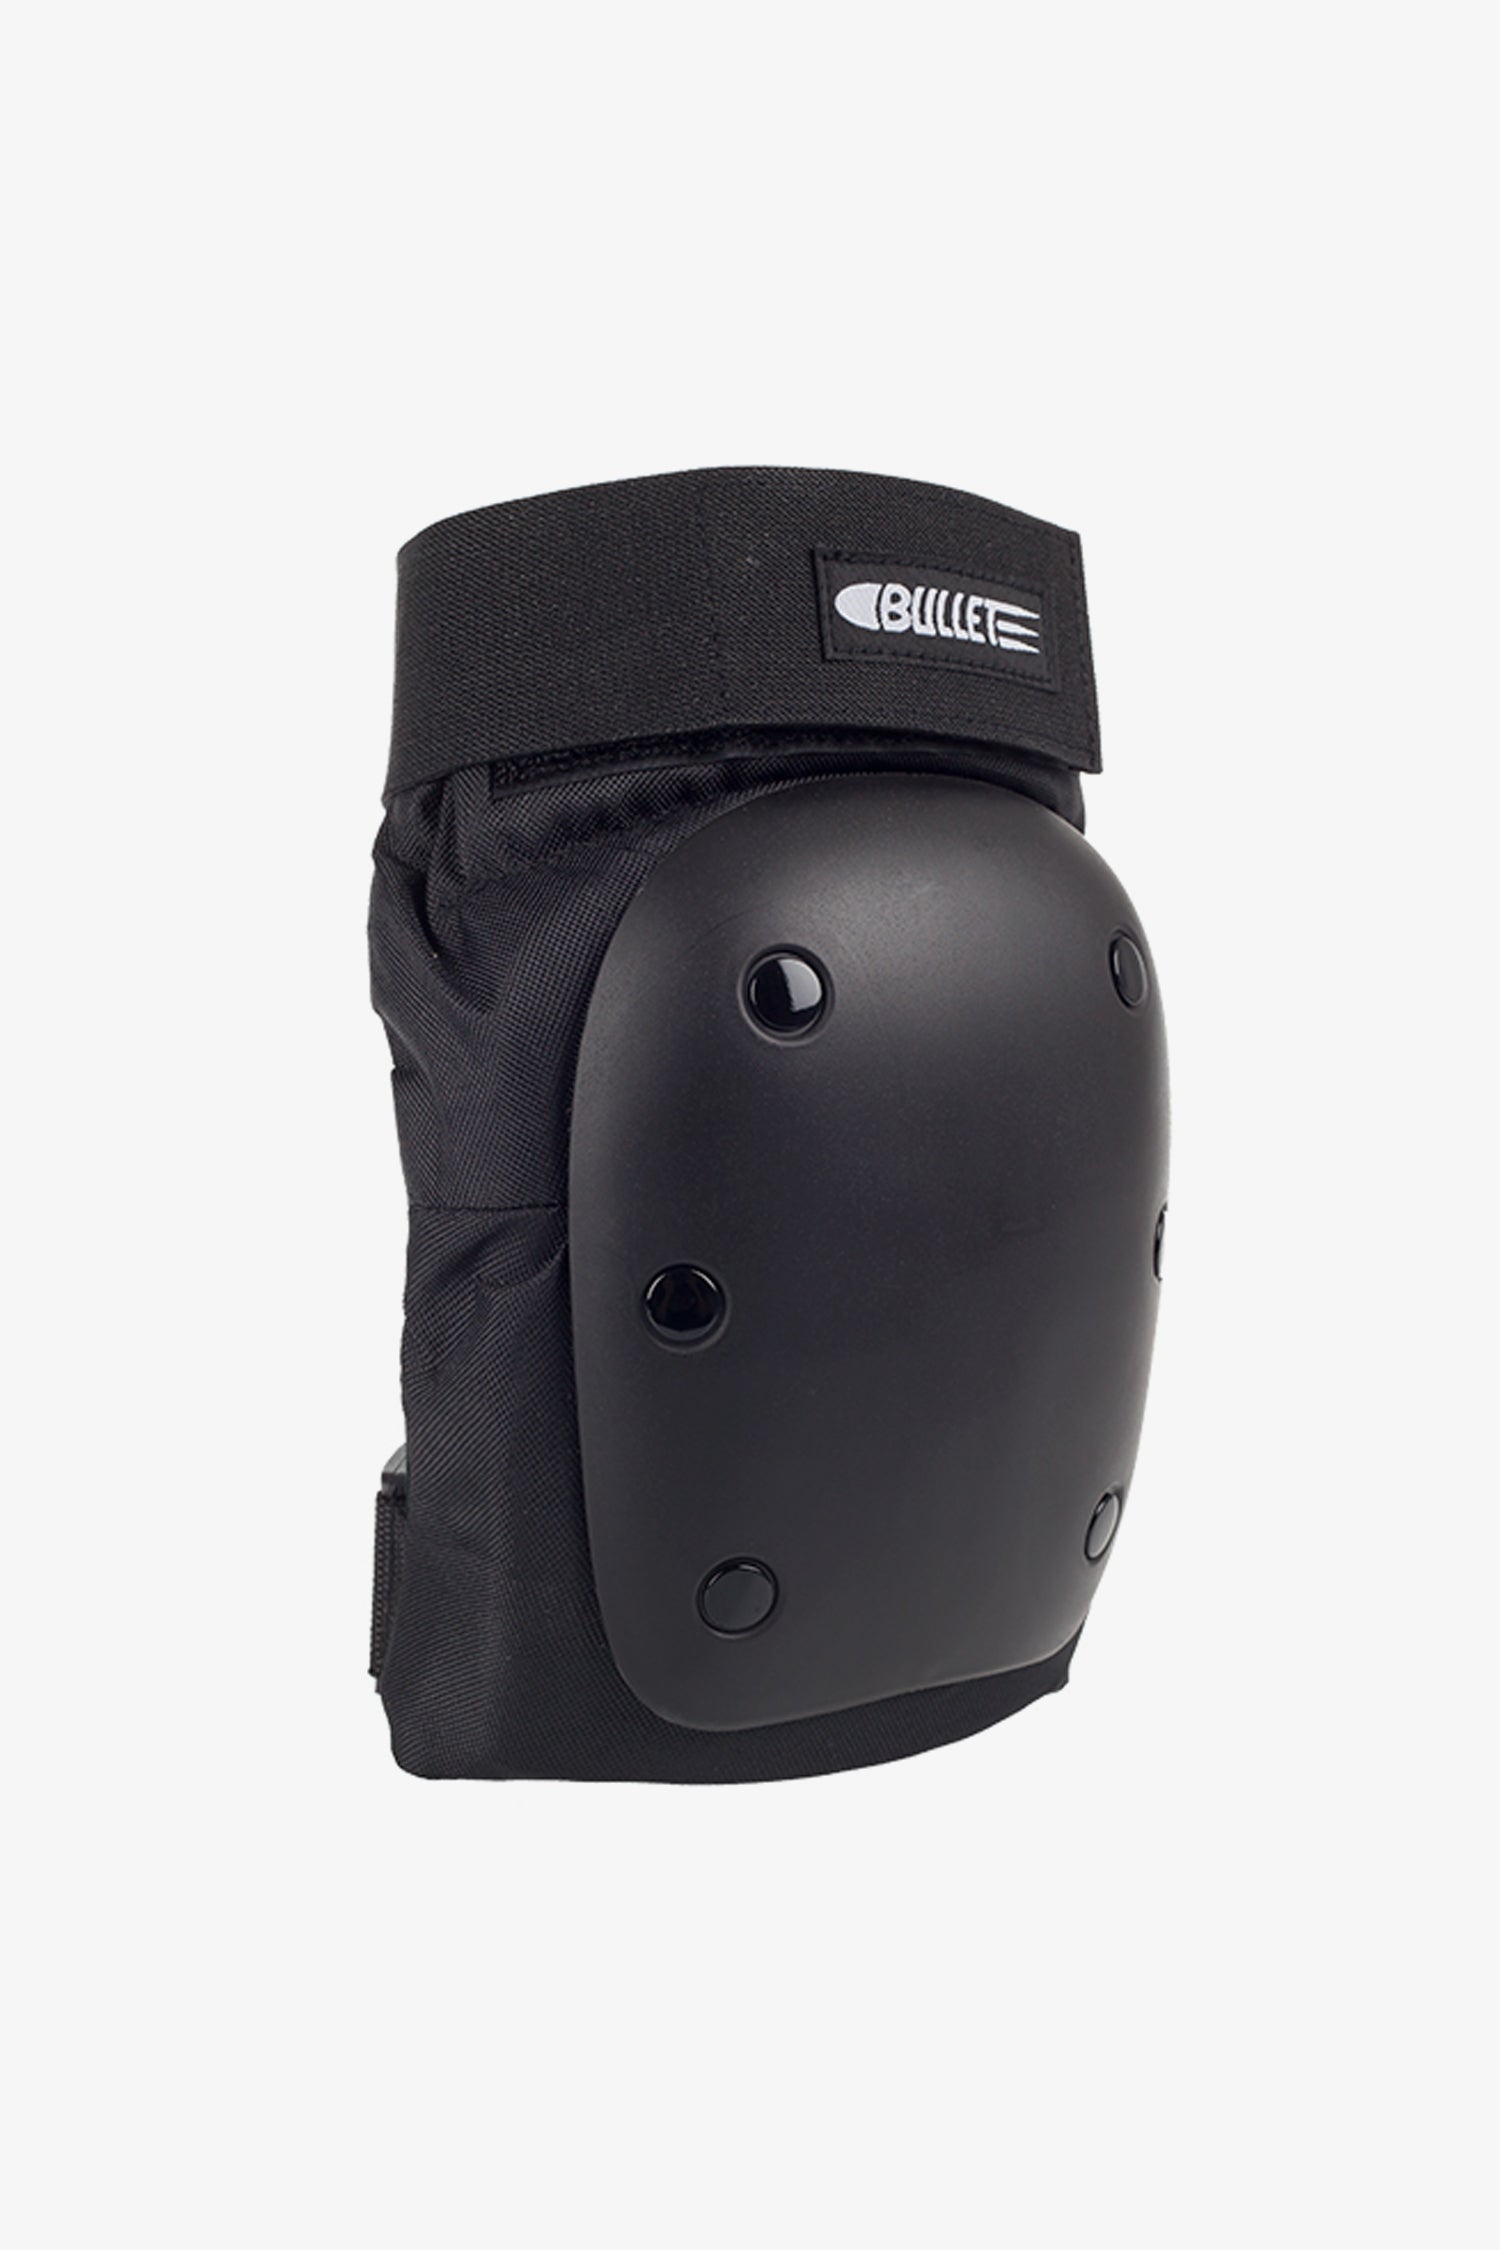 Selectshop FRAME - BULLET Knee Pad Bullet Protective Gear Dubai